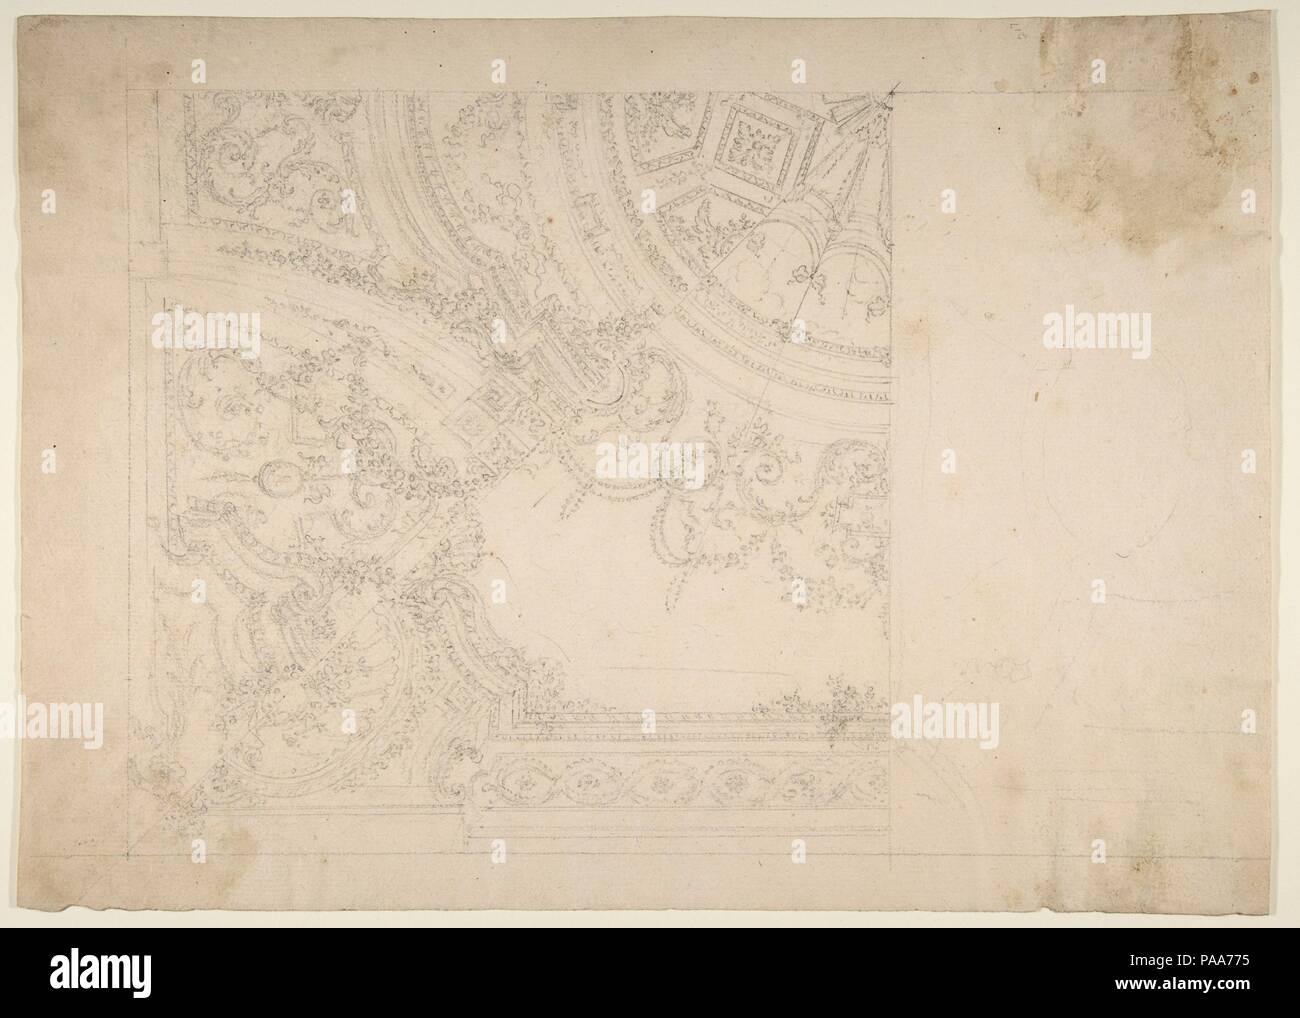 Design for Ceiling. Artist: Workshop of Leonardo Marini (Italian, Piedmontese documented ca. 1730-after 1797). Dimensions: 10 9/16 x 14 13/16 in. (26.9 x 37.6 cm). Date: 18th century. Museum: Metropolitan Museum of Art, New York, USA. Stock Photo